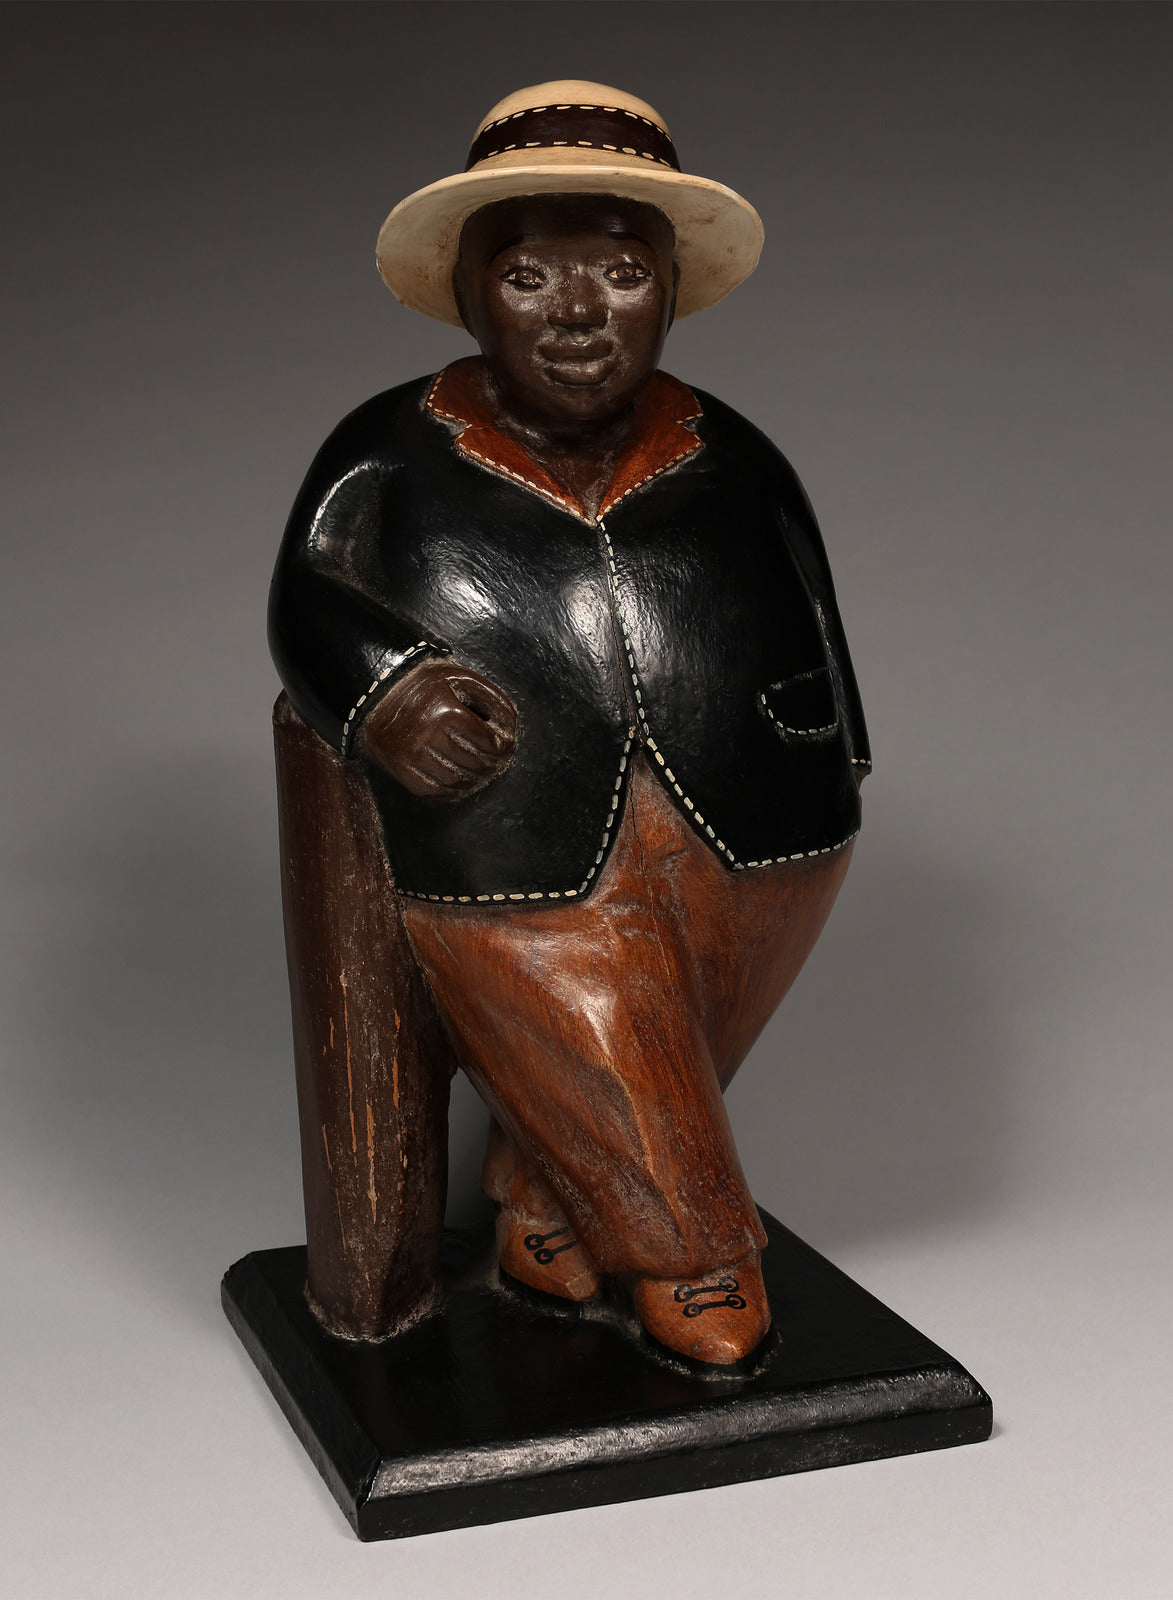 Handcrafted Sculptures - African Art - Home Decor - Wood - Statue - Figurine - Gentleman - Painted